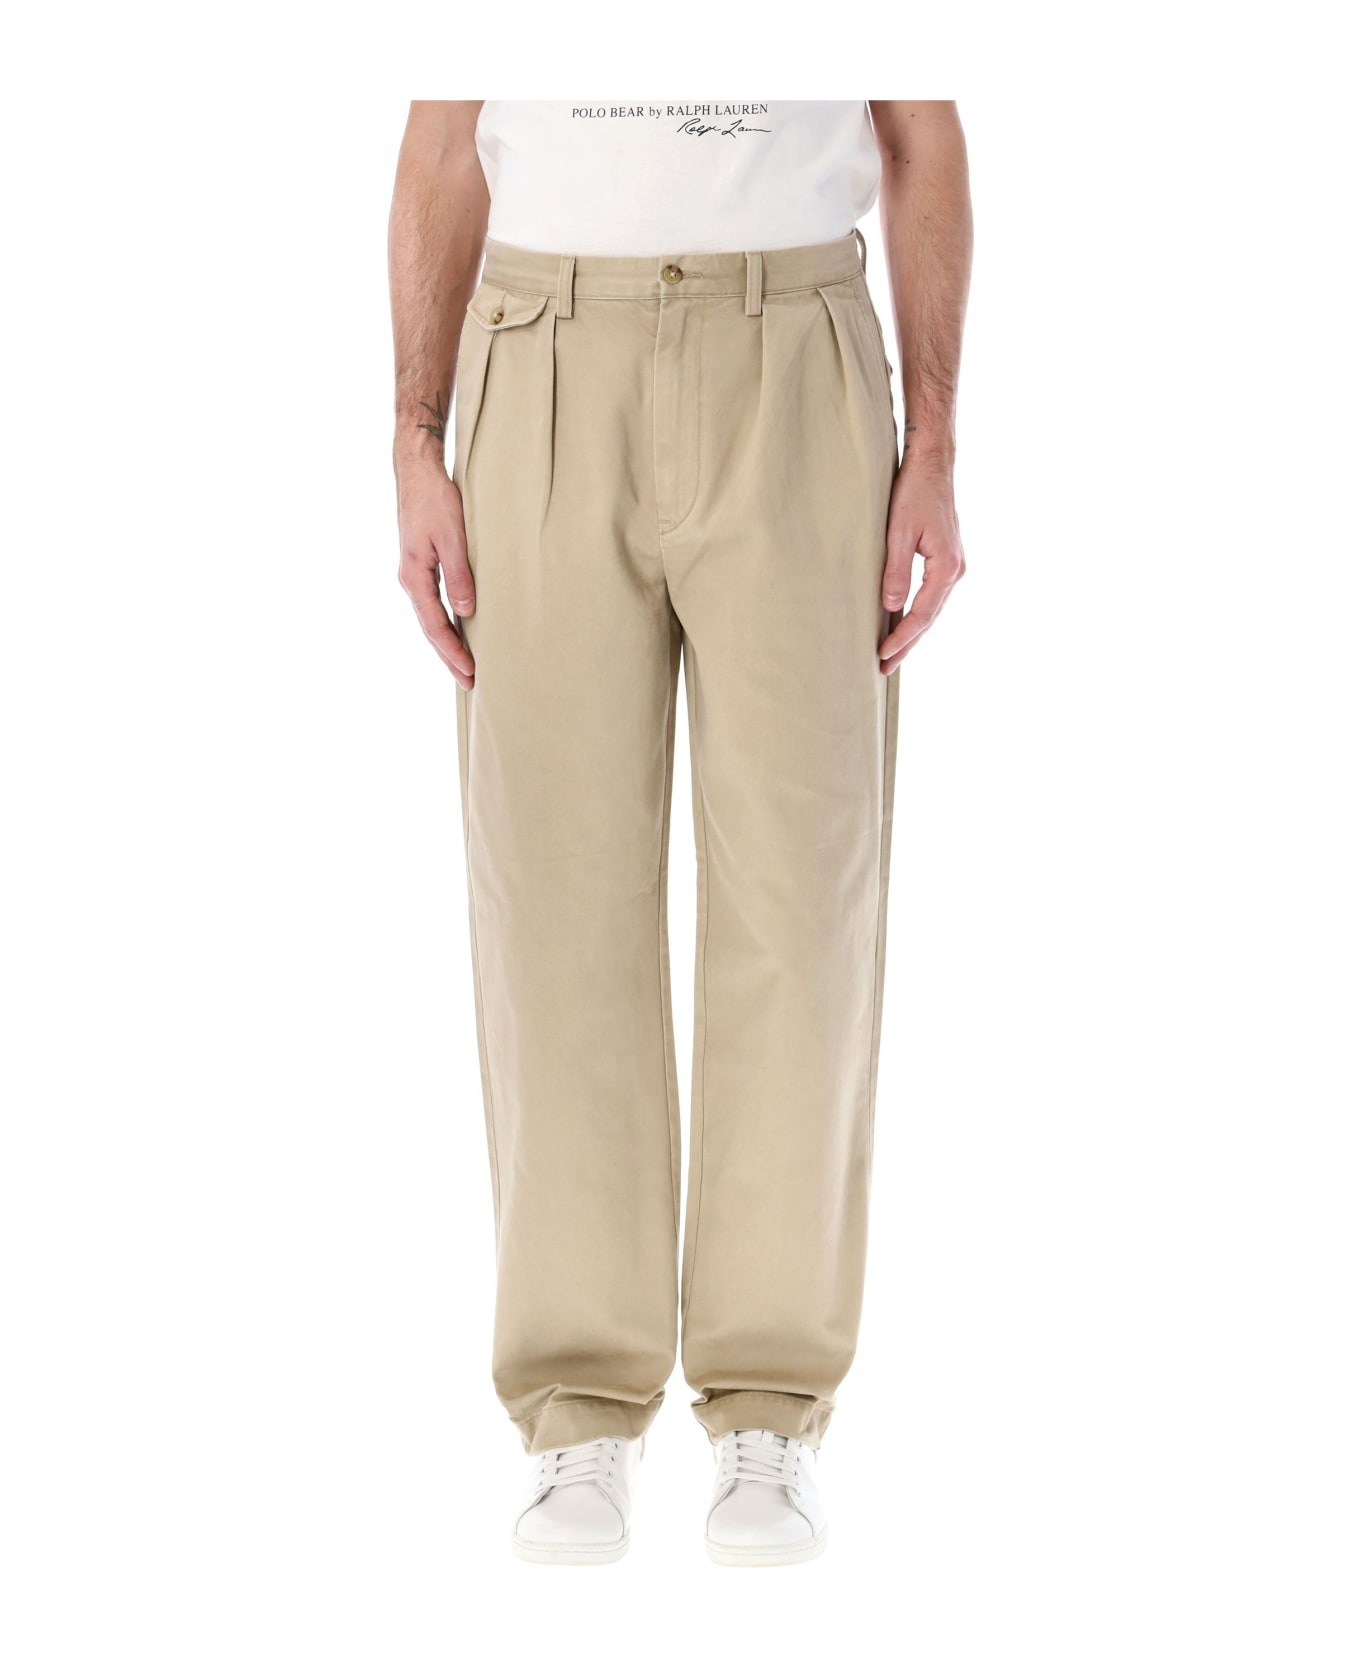 Polo Ralph Lauren Whitman Chino Trousers - BEIGE